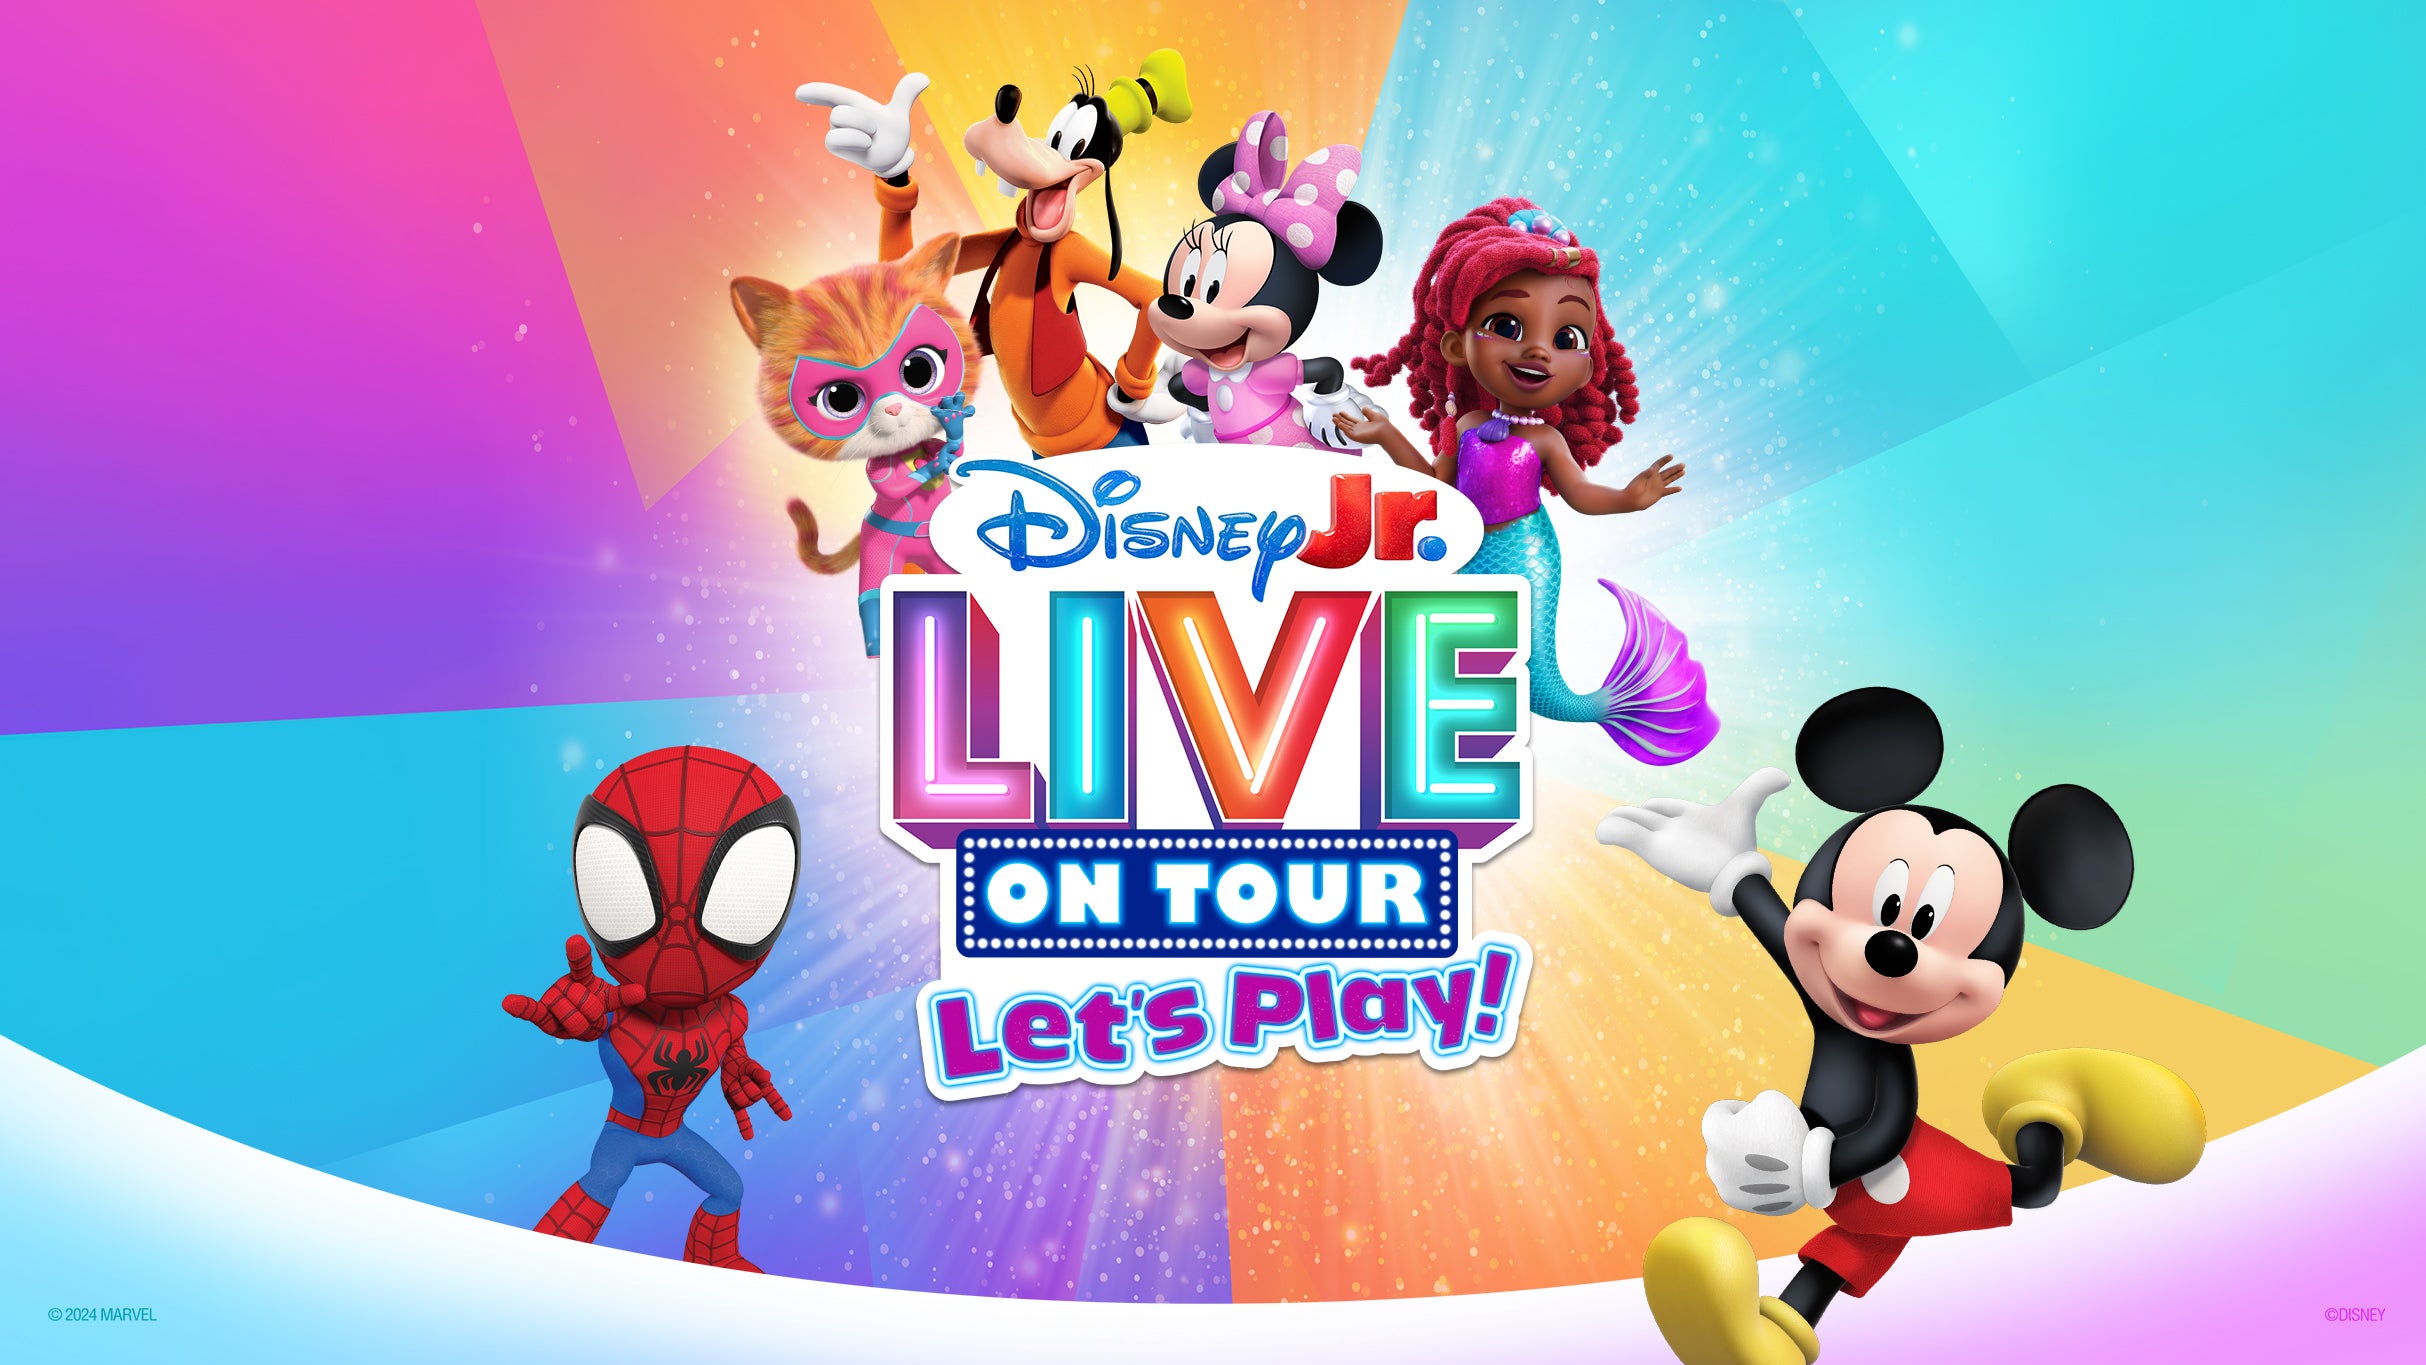 Disney Jr. Live On Tour: Let's Play presale passcode for legit tickets in Rosemont